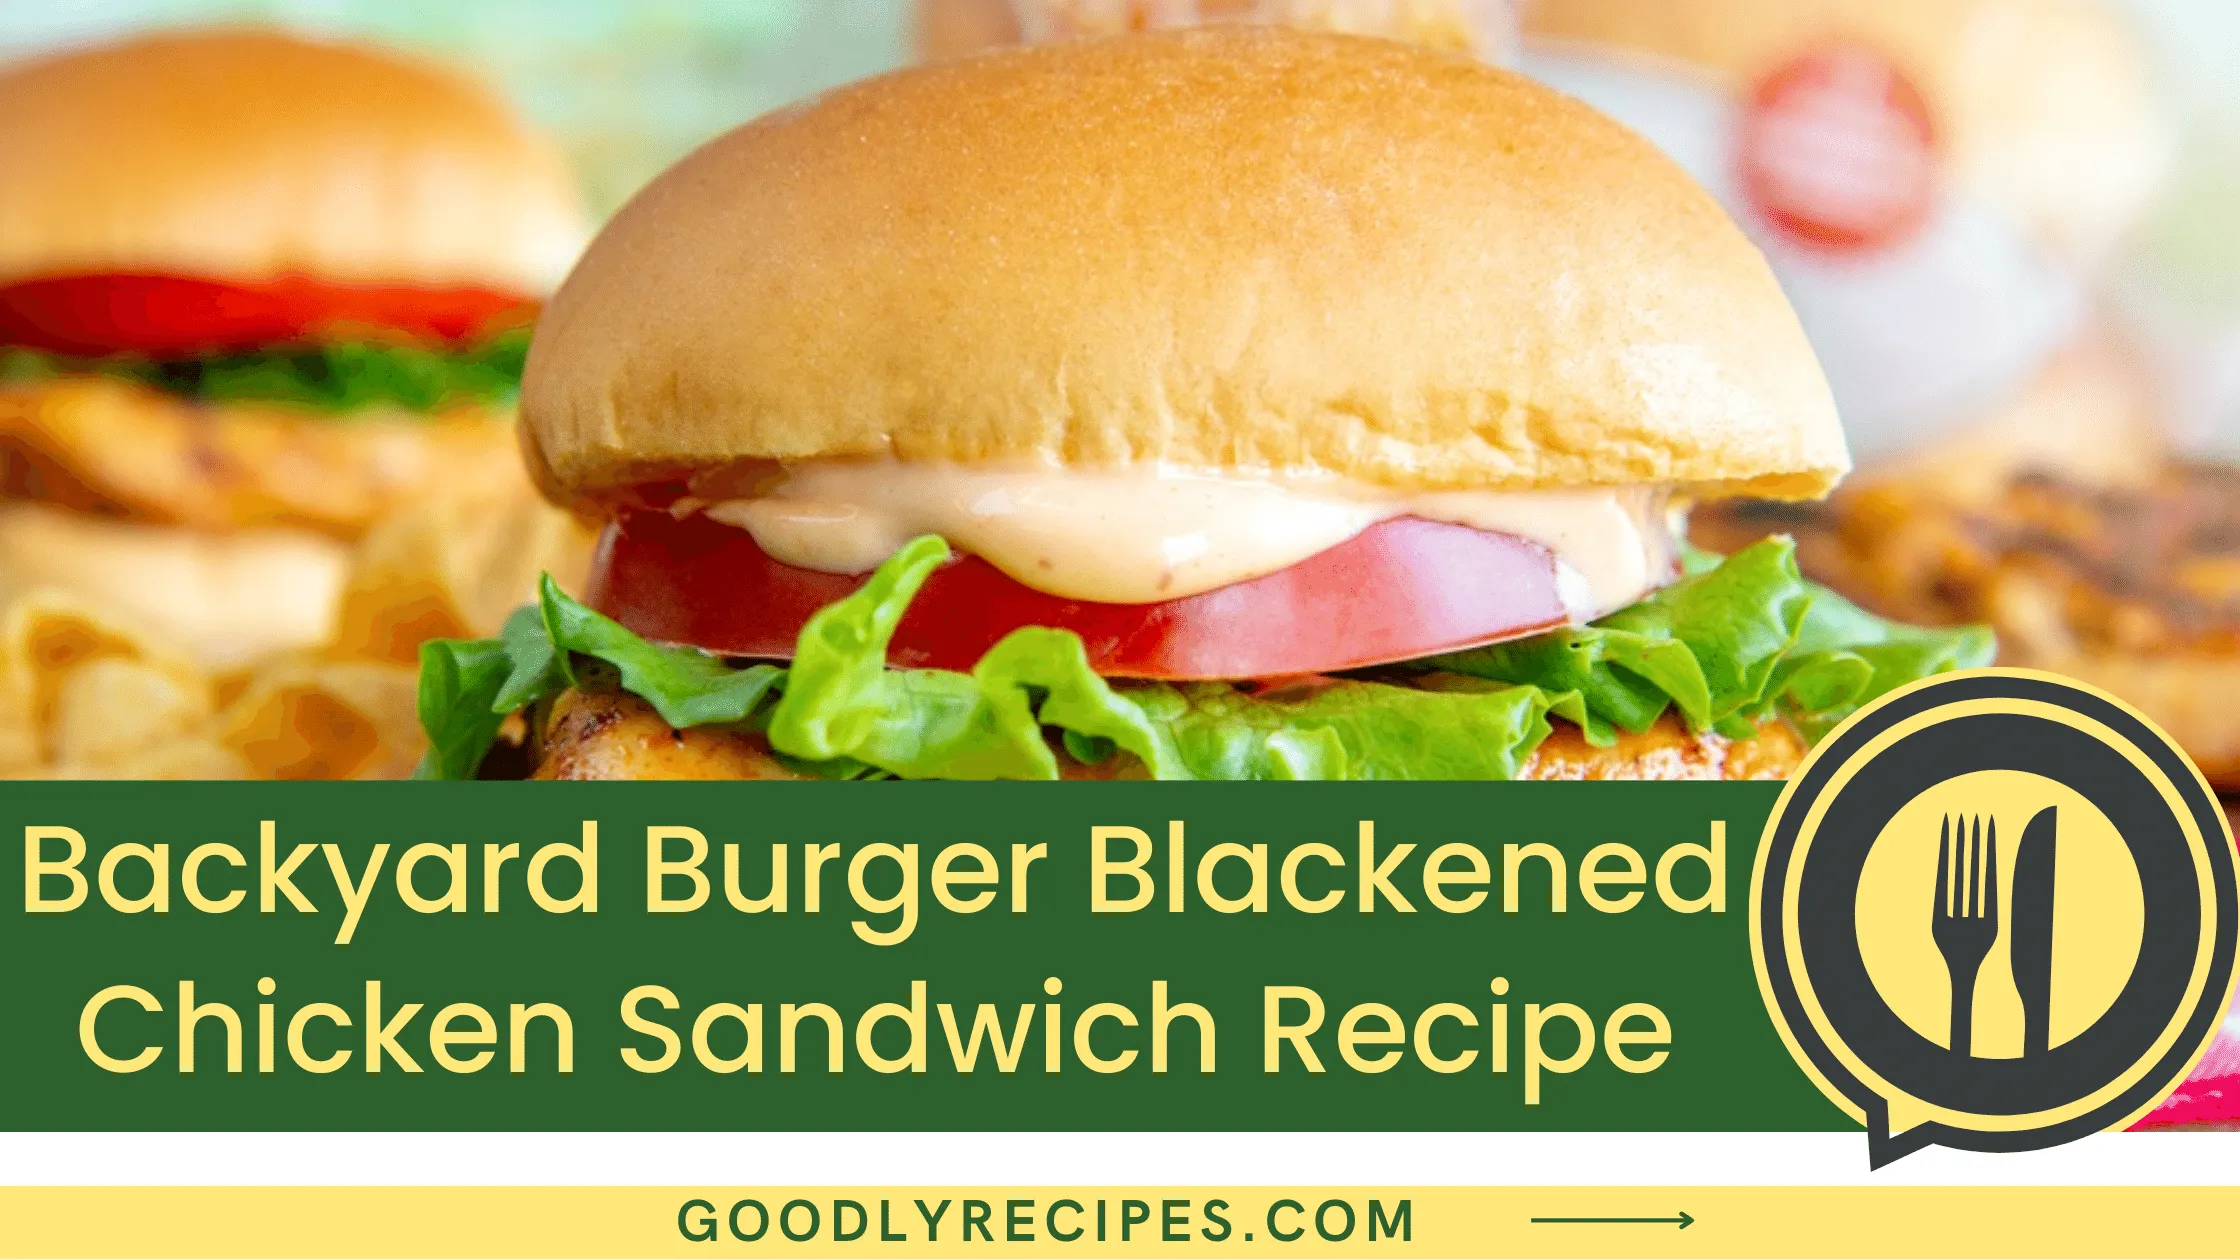 What is Backyard Burger Blackened Chicken Sandwich?